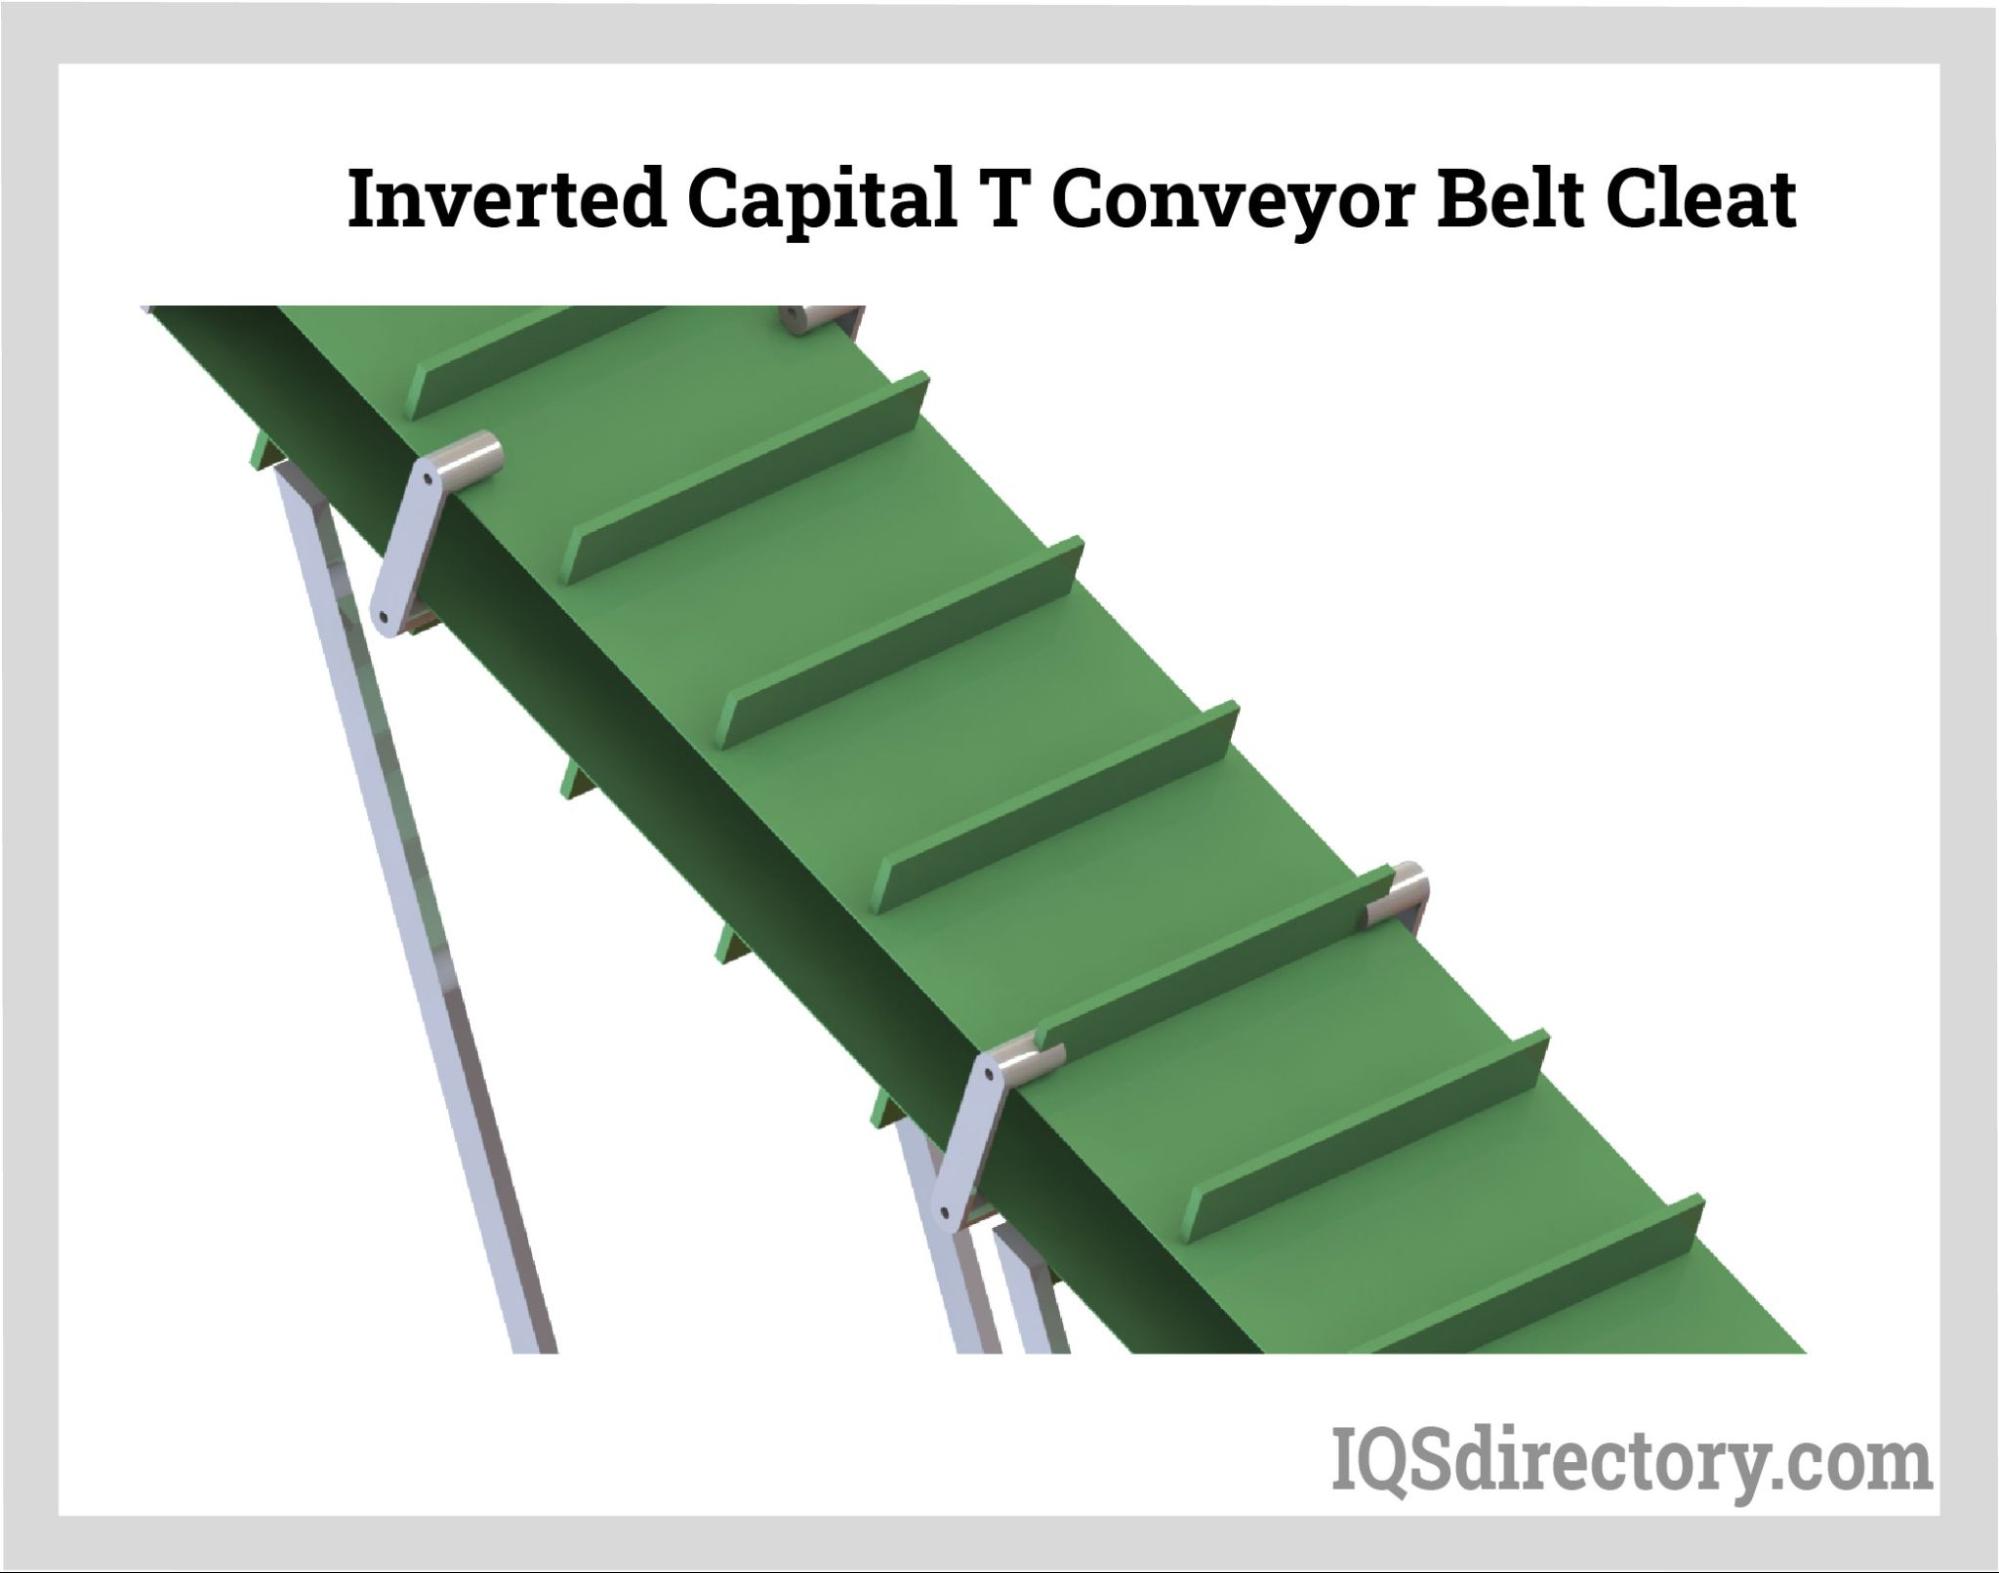 Inverted Capital T Conveyor Belt Cleat